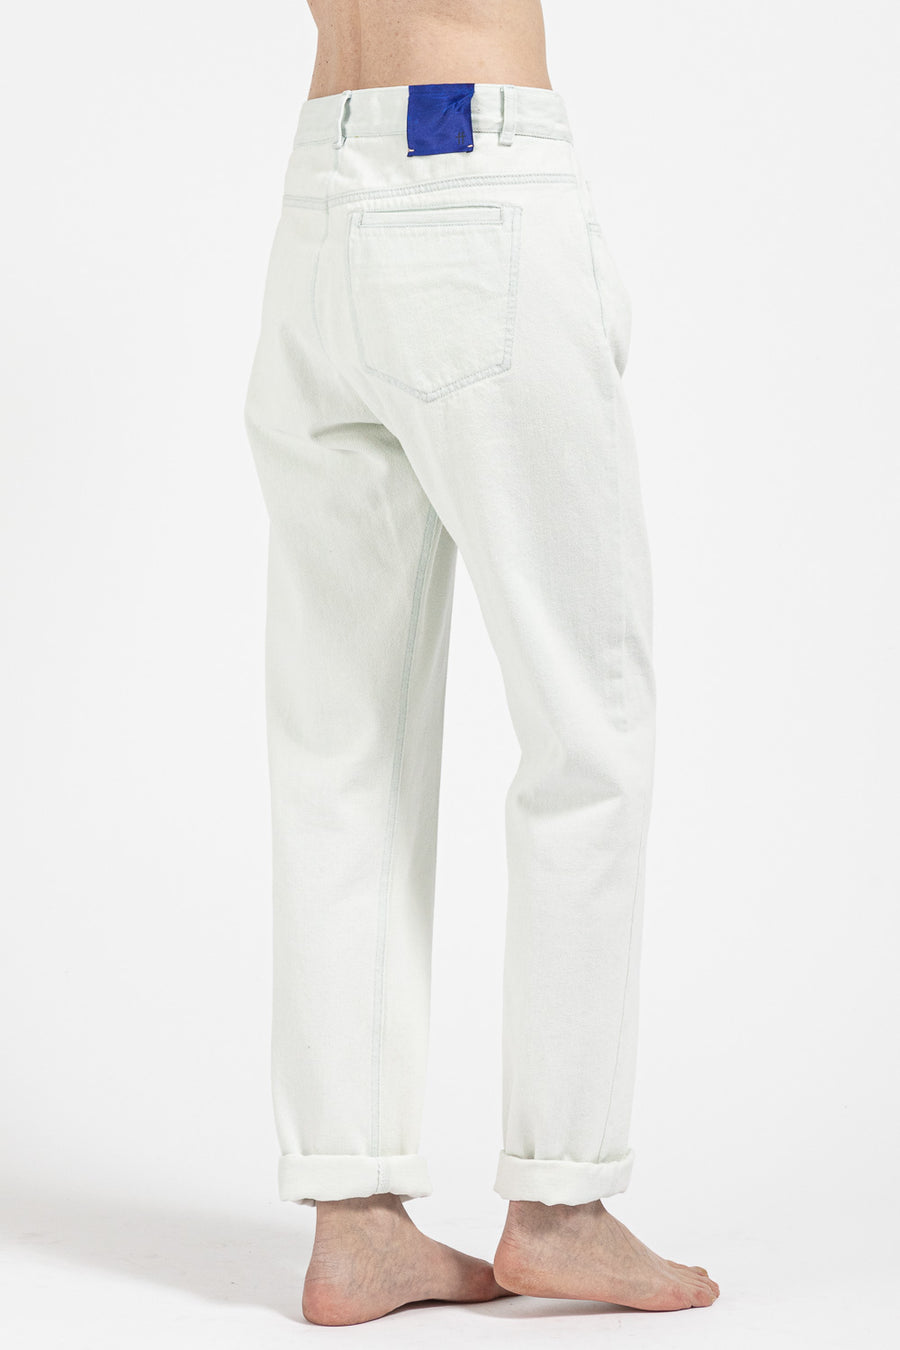 Pantalone Forte Forte in denim color bleach